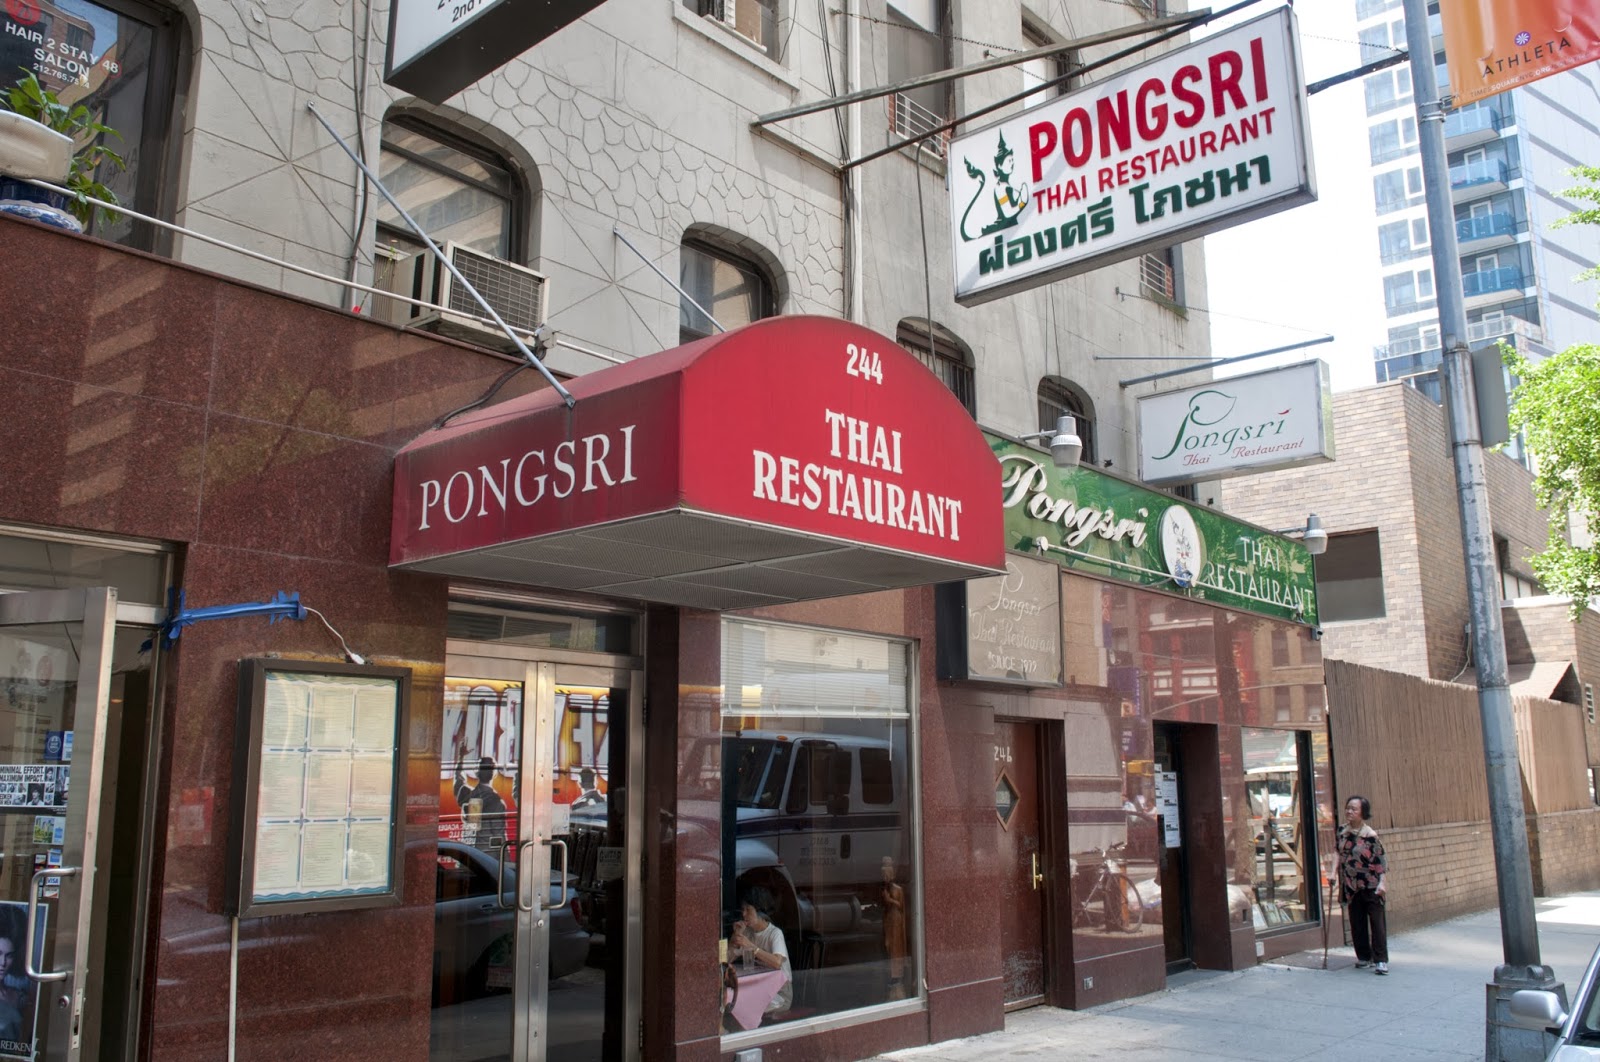 Photo of Pongsri Thai Restaurant in New York City, New York, United States - 2 Picture of Restaurant, Food, Point of interest, Establishment